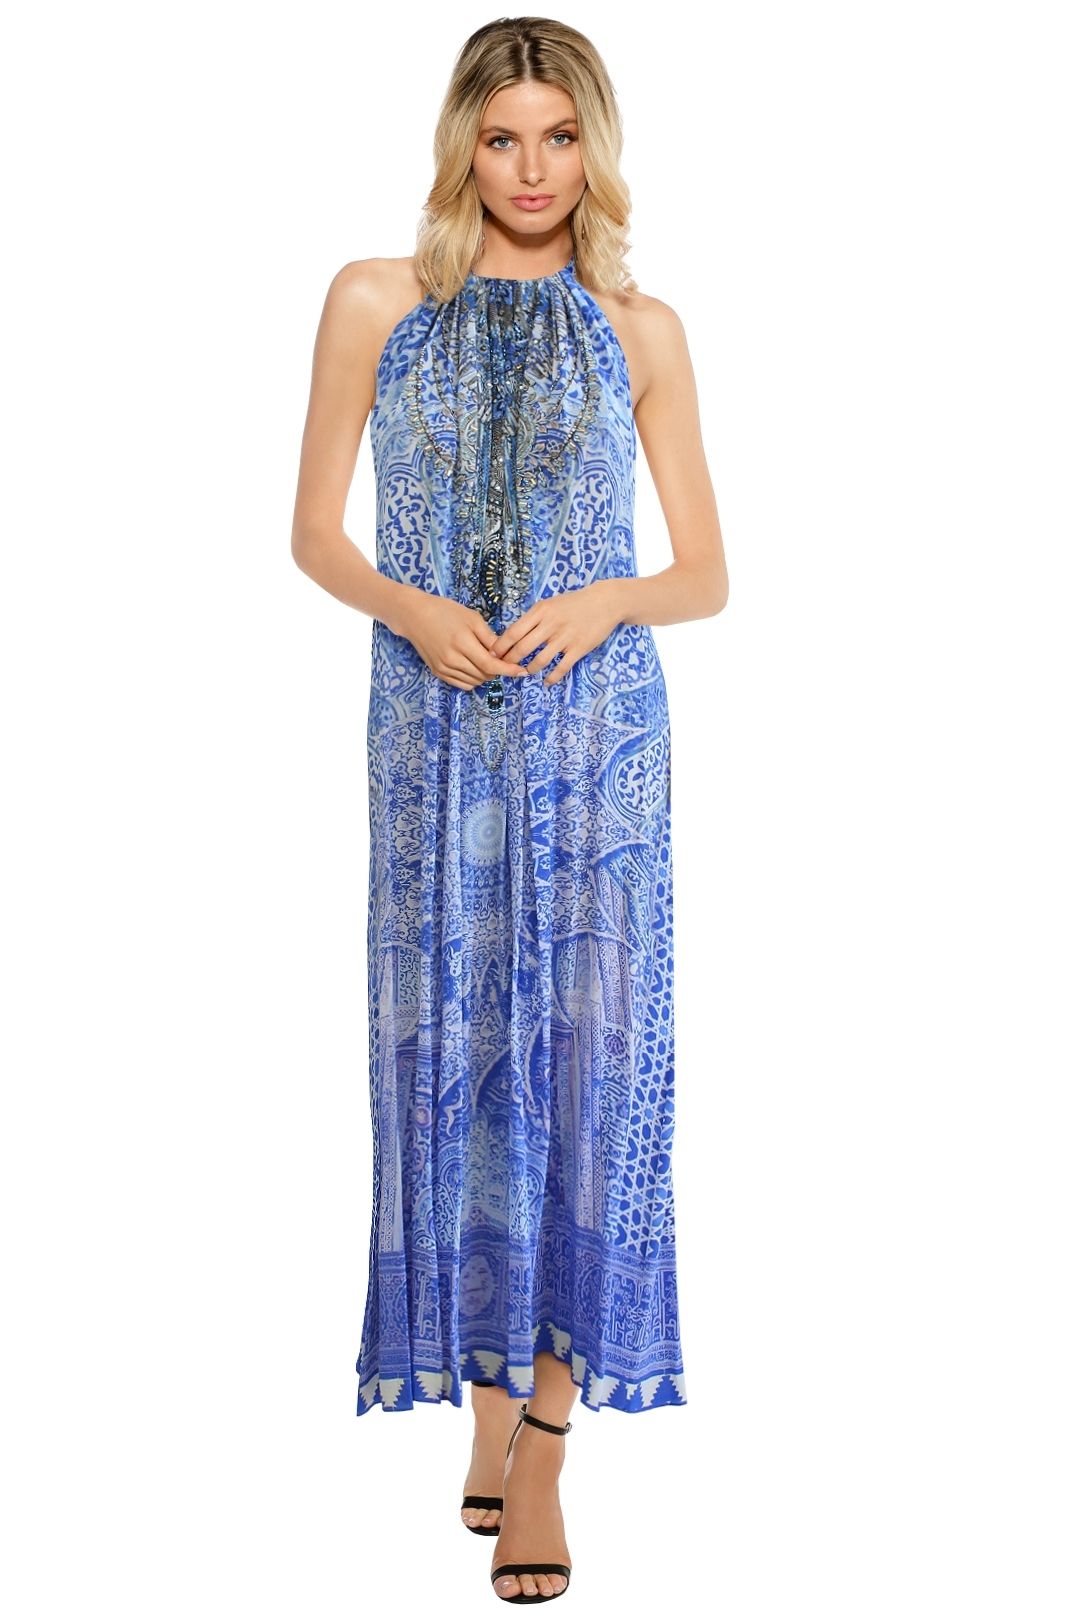 Camilla - Bosphorous Drawstring Dress - Prints - Front